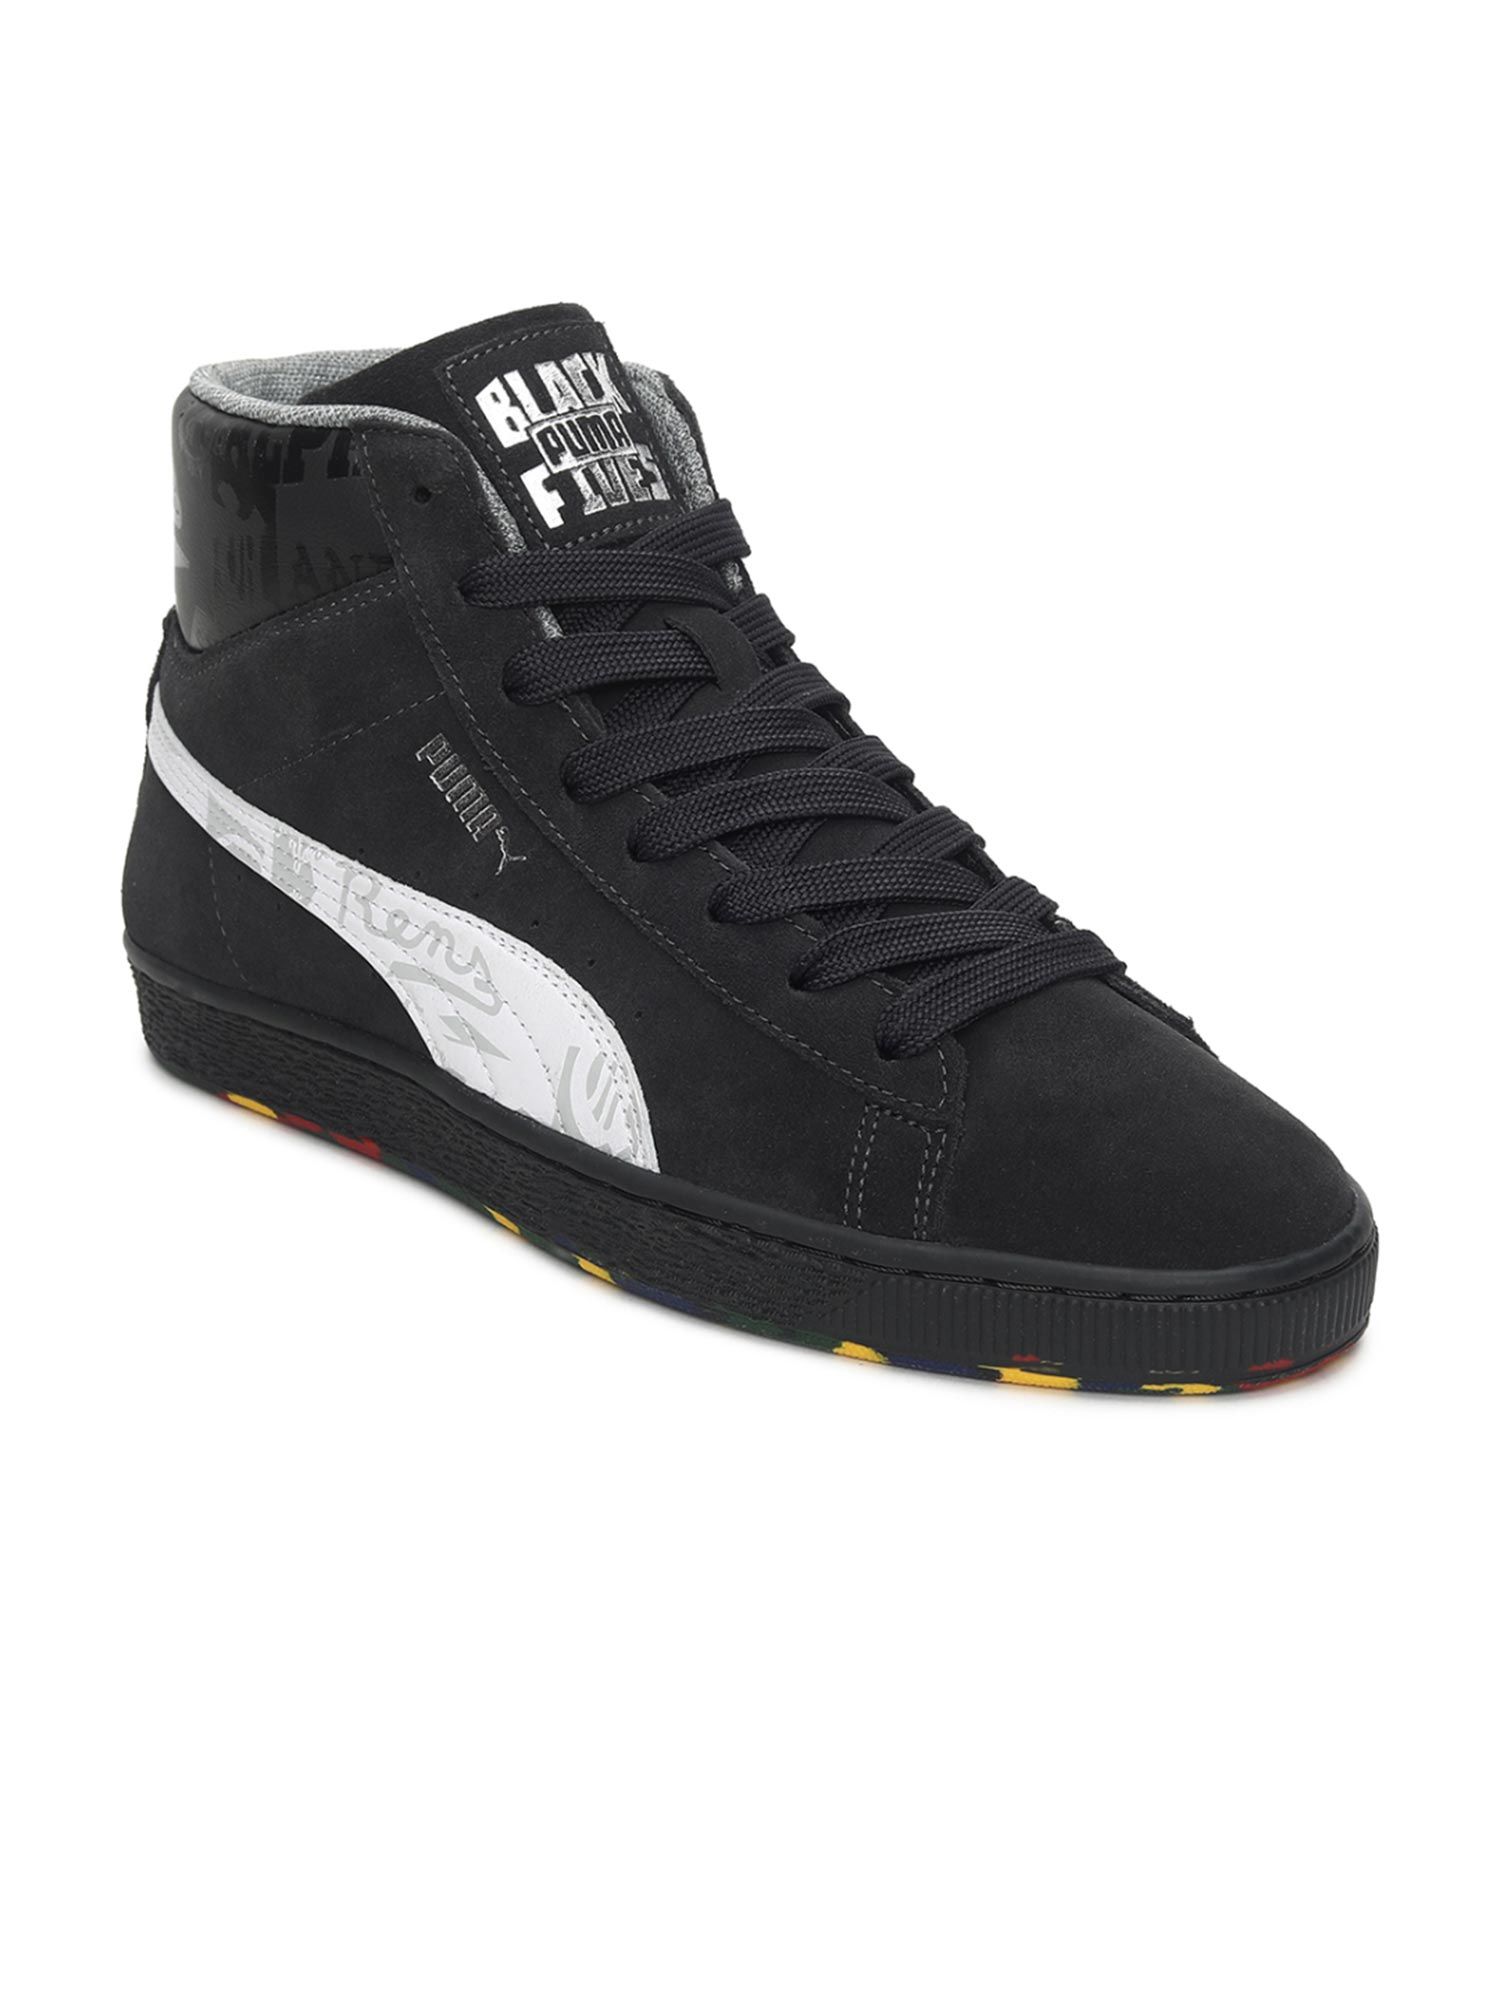 Puma Suede Mid x Black Fives Men Black Sneakers (UK 8)